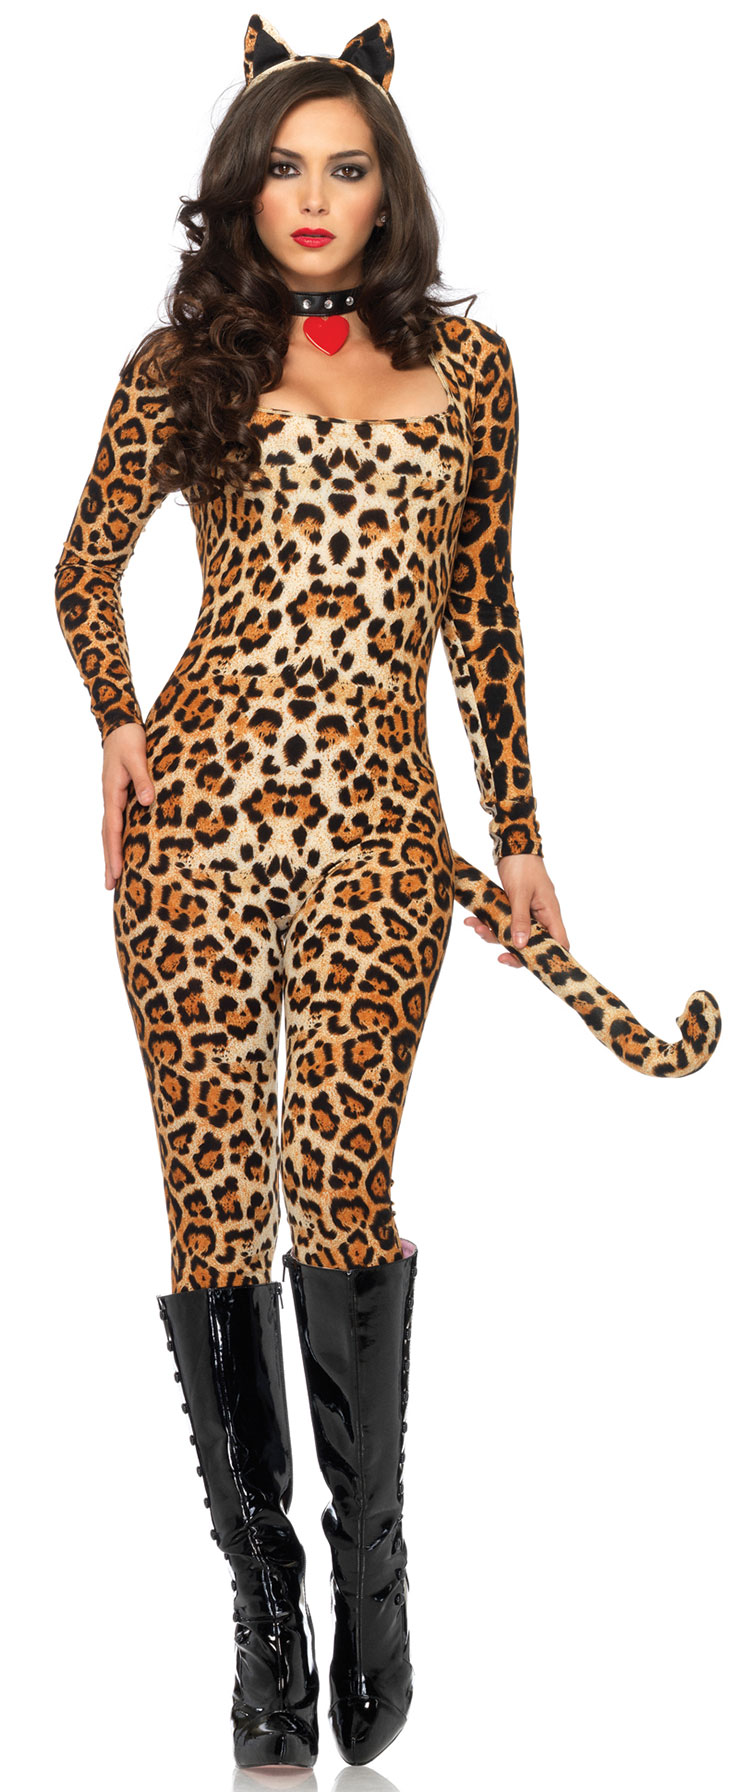 Women's Sexy Leopard Costume